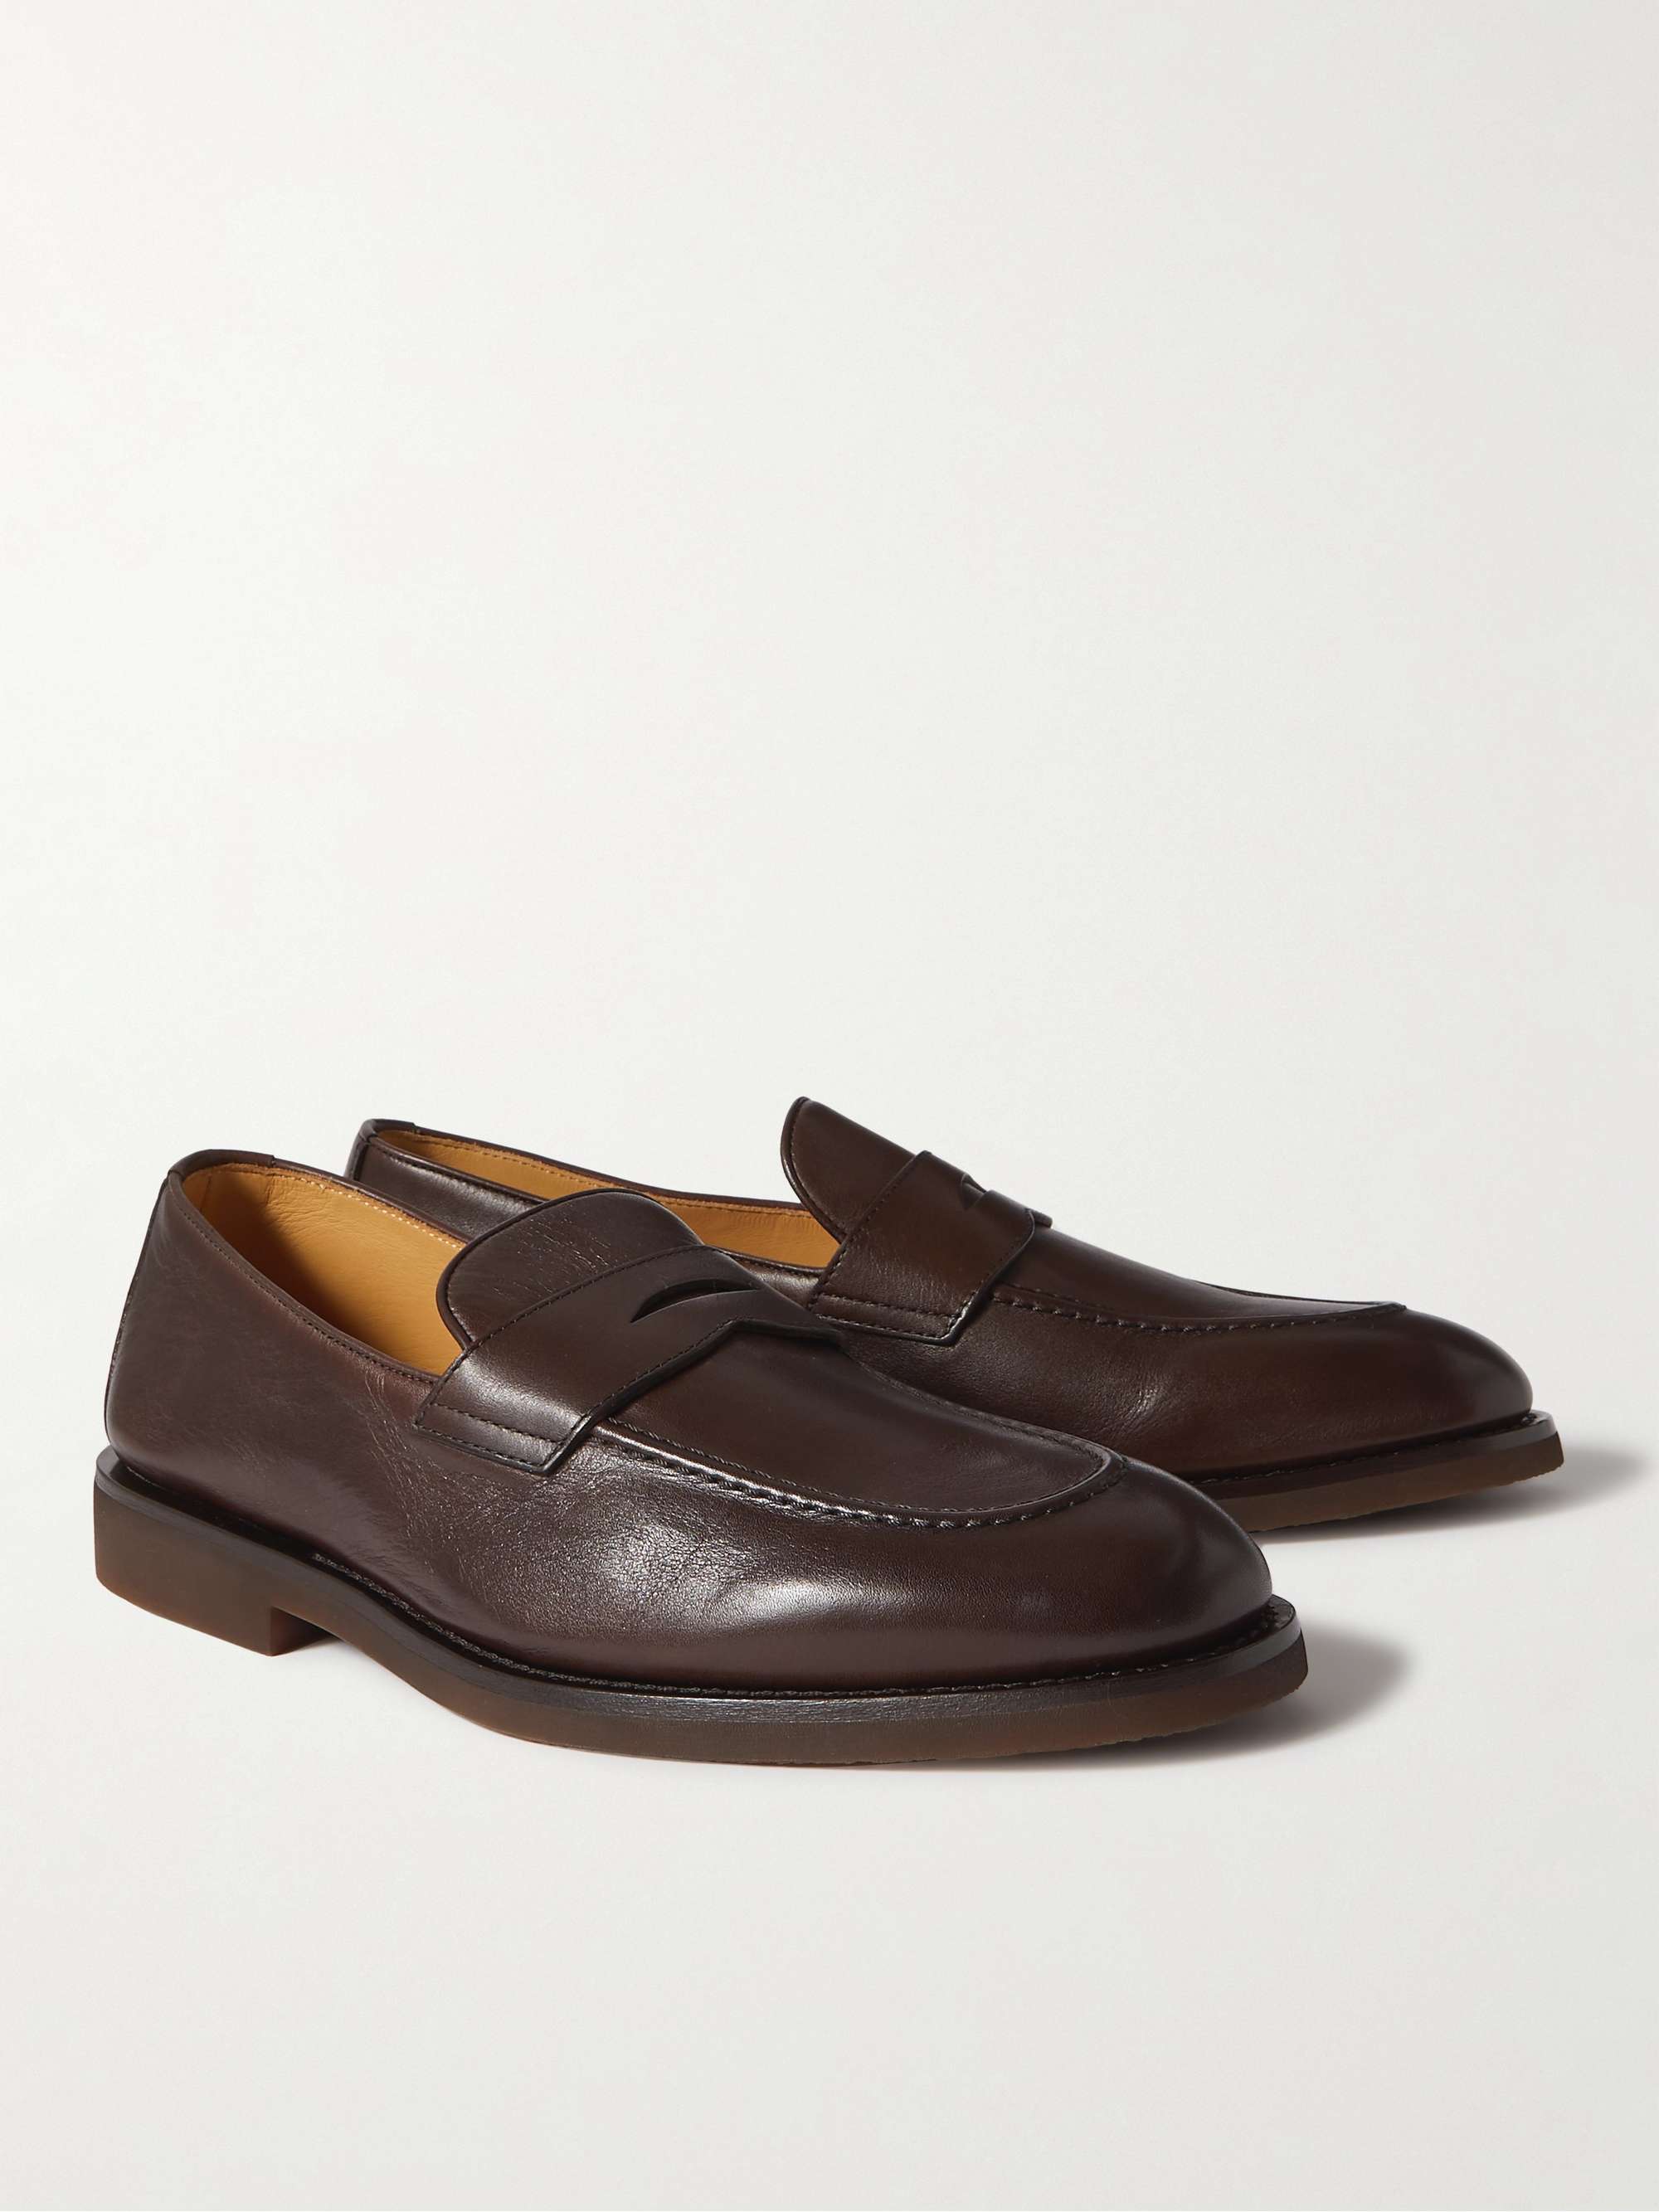 BRUNELLO CUCINELLI Flex Leather Penny Loafers for Men | MR PORTER